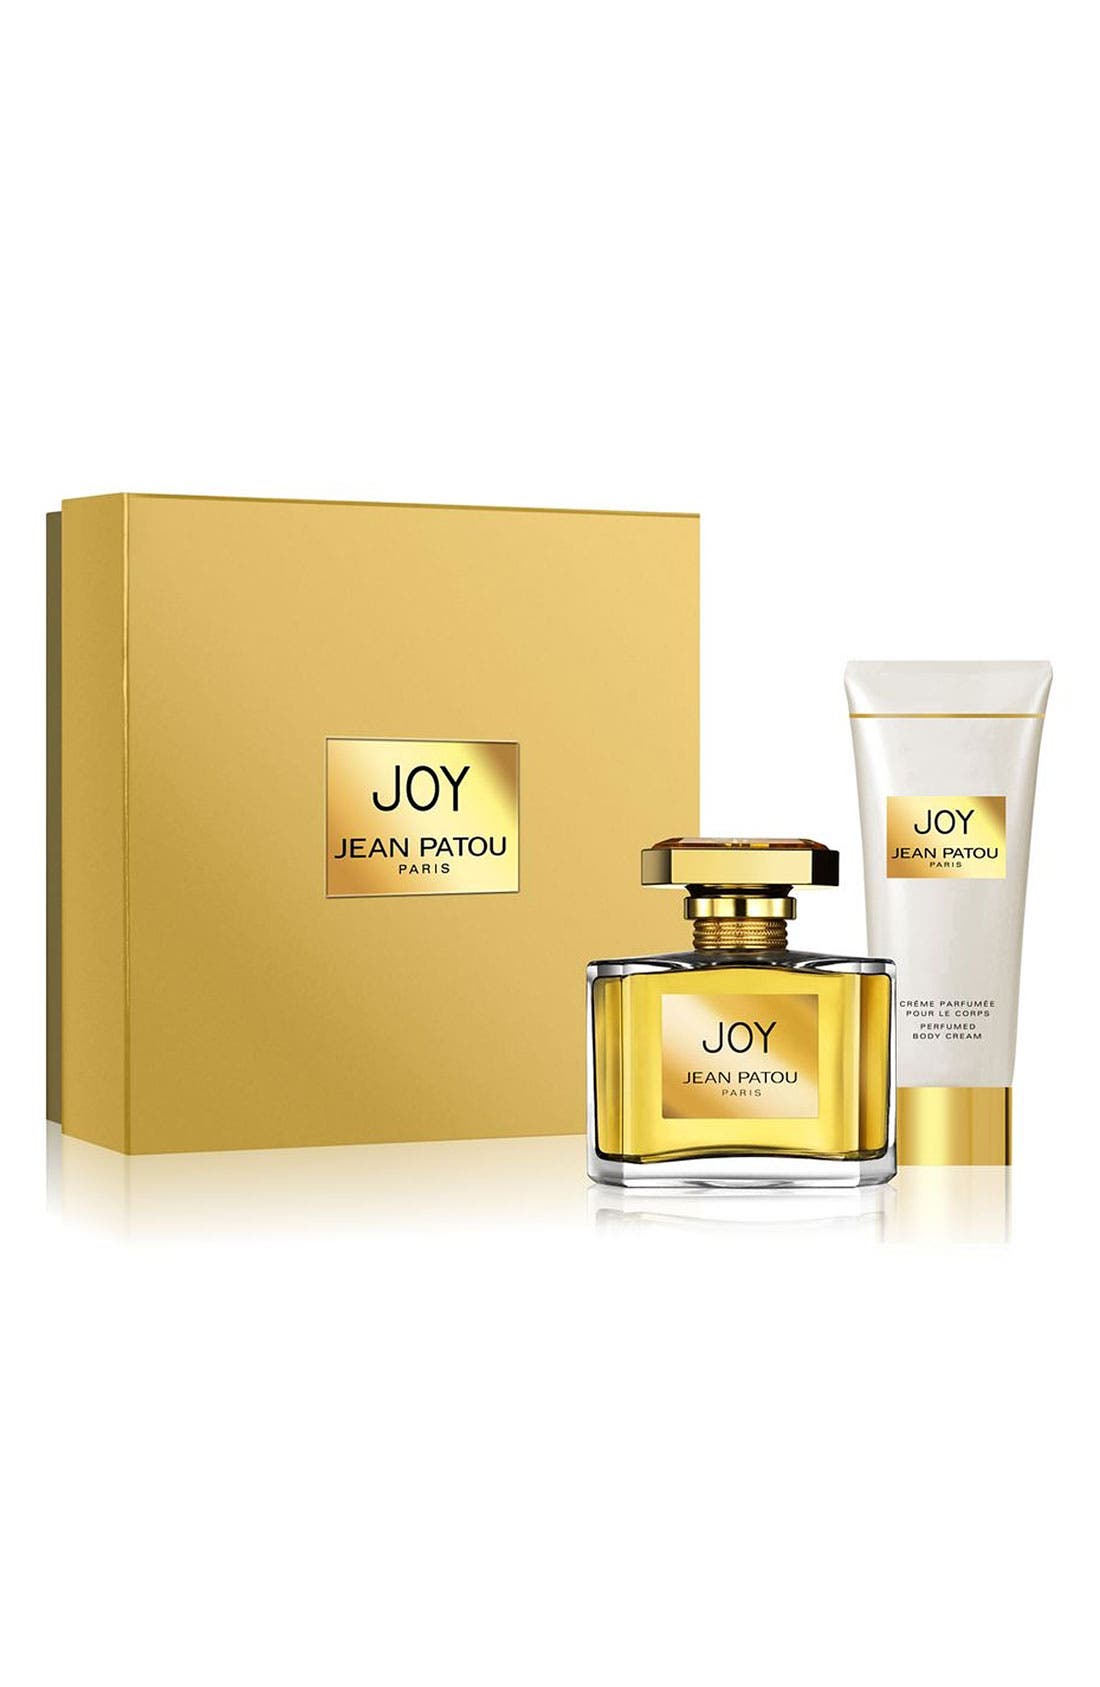 joy perfume nordstrom